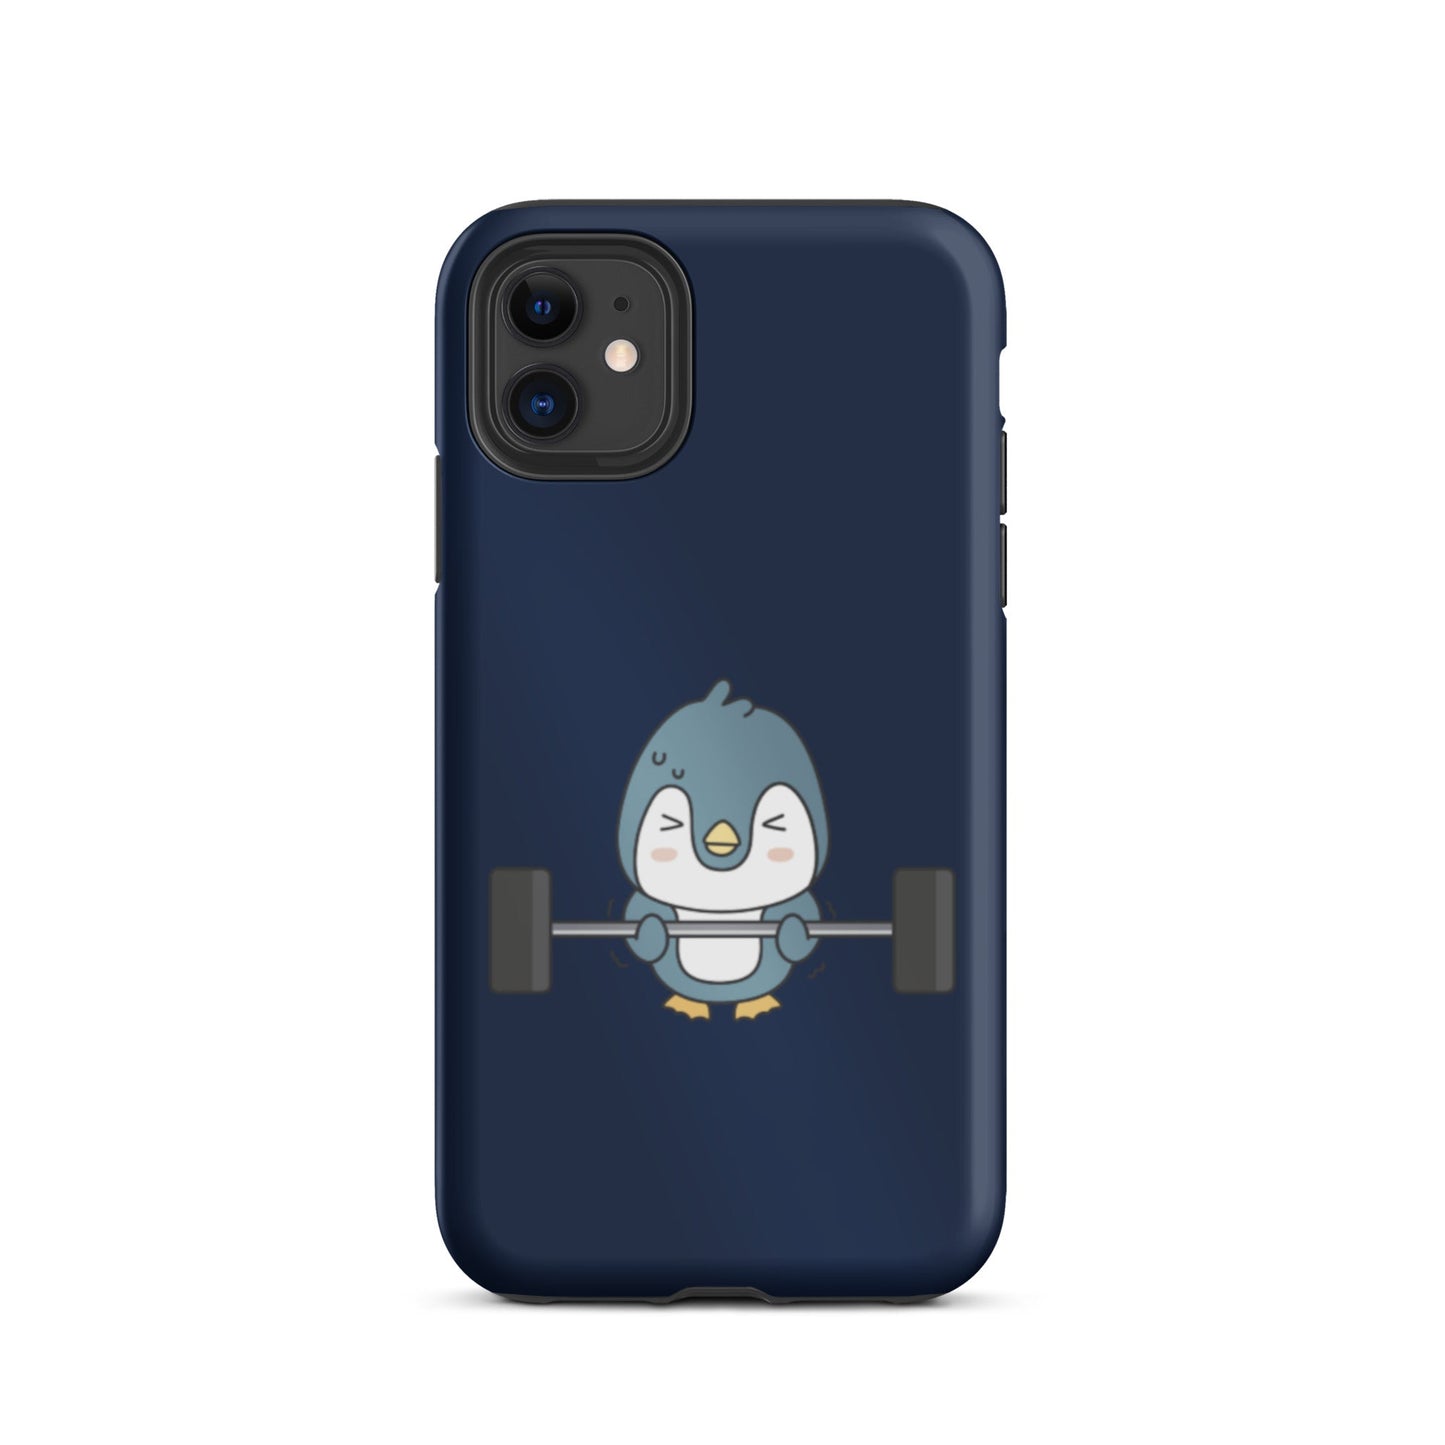 Icespheric Tough iPhone Penguin case